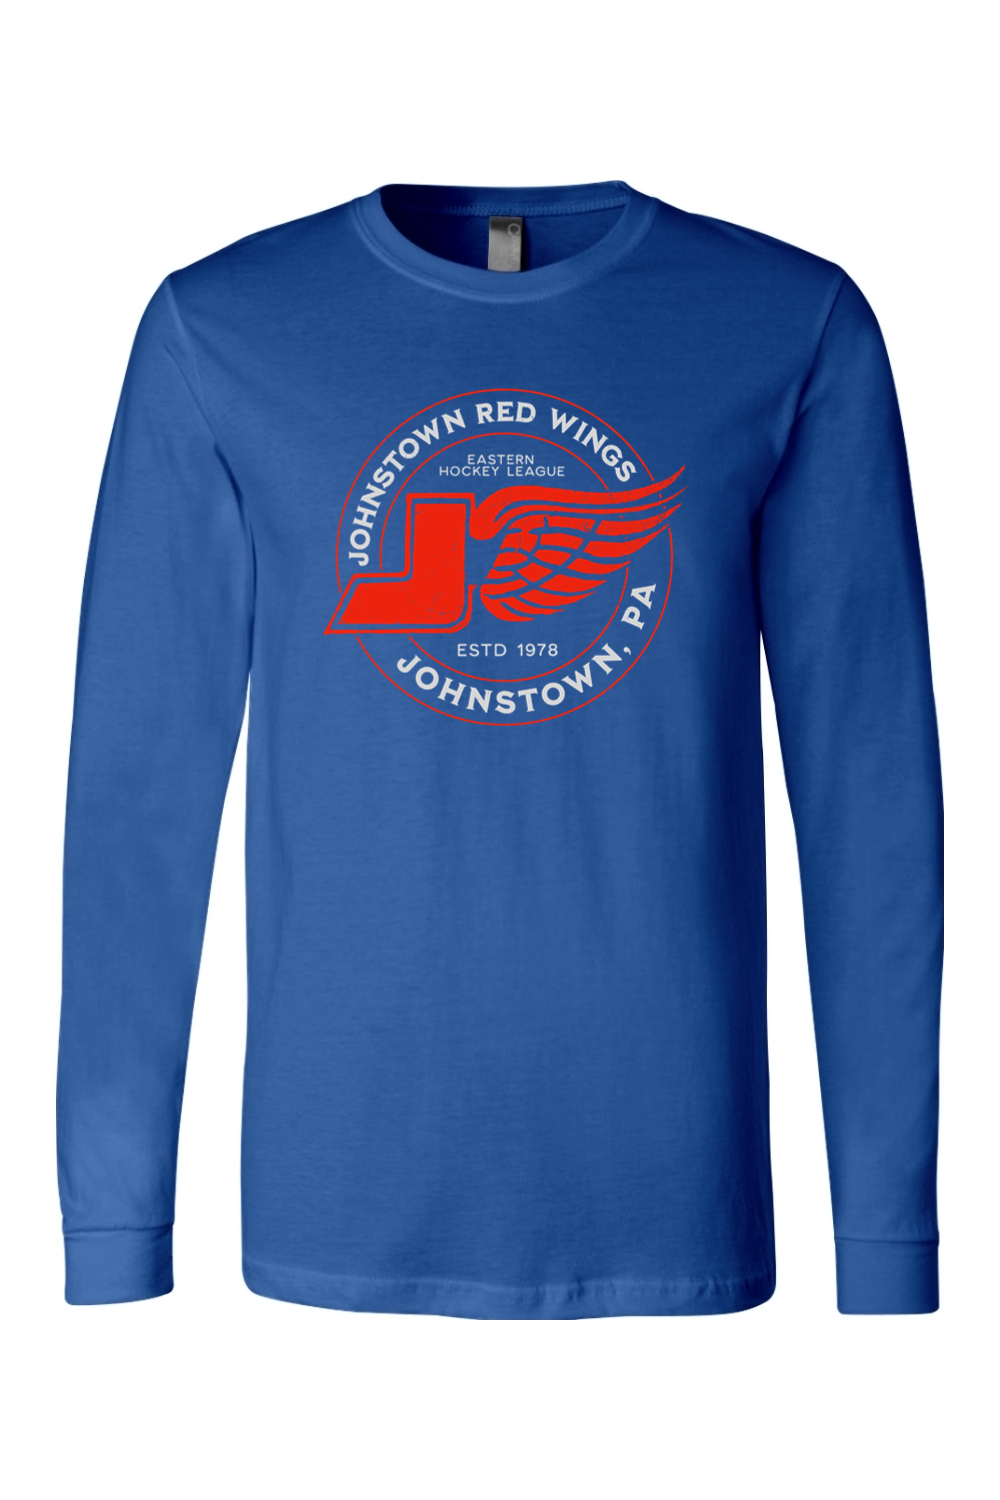 Johnstown Red Wings Hockey - Long Sleeve Tee - Yinzylvania